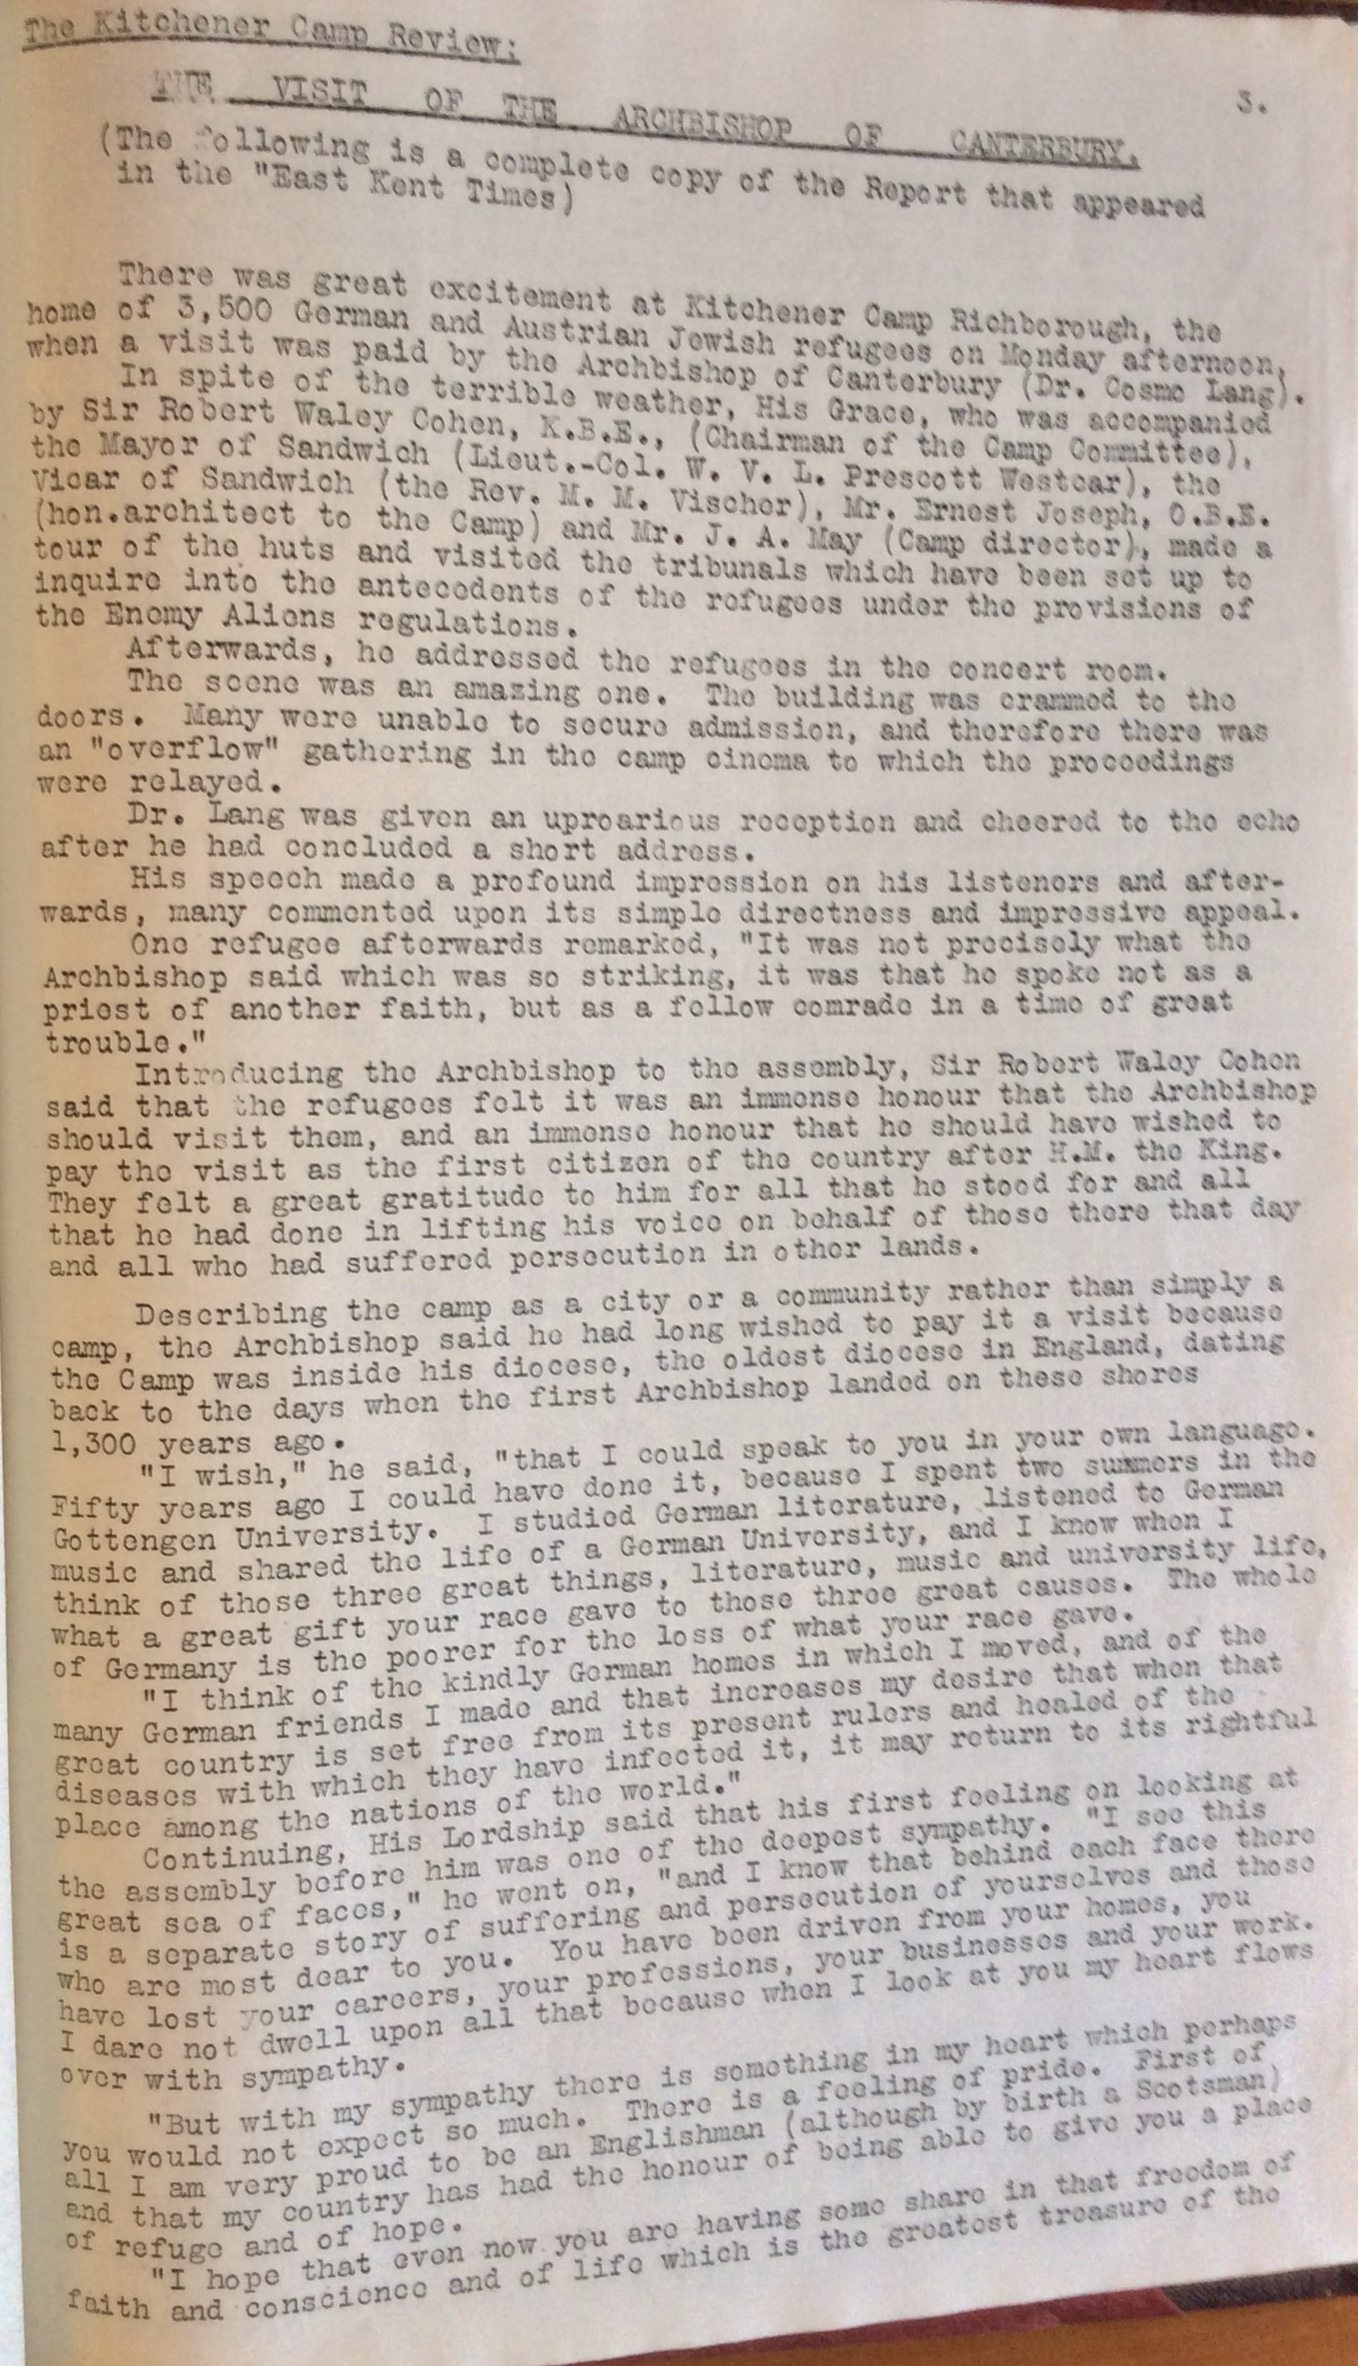 Kitchener Camp Review, November 1939, page 3